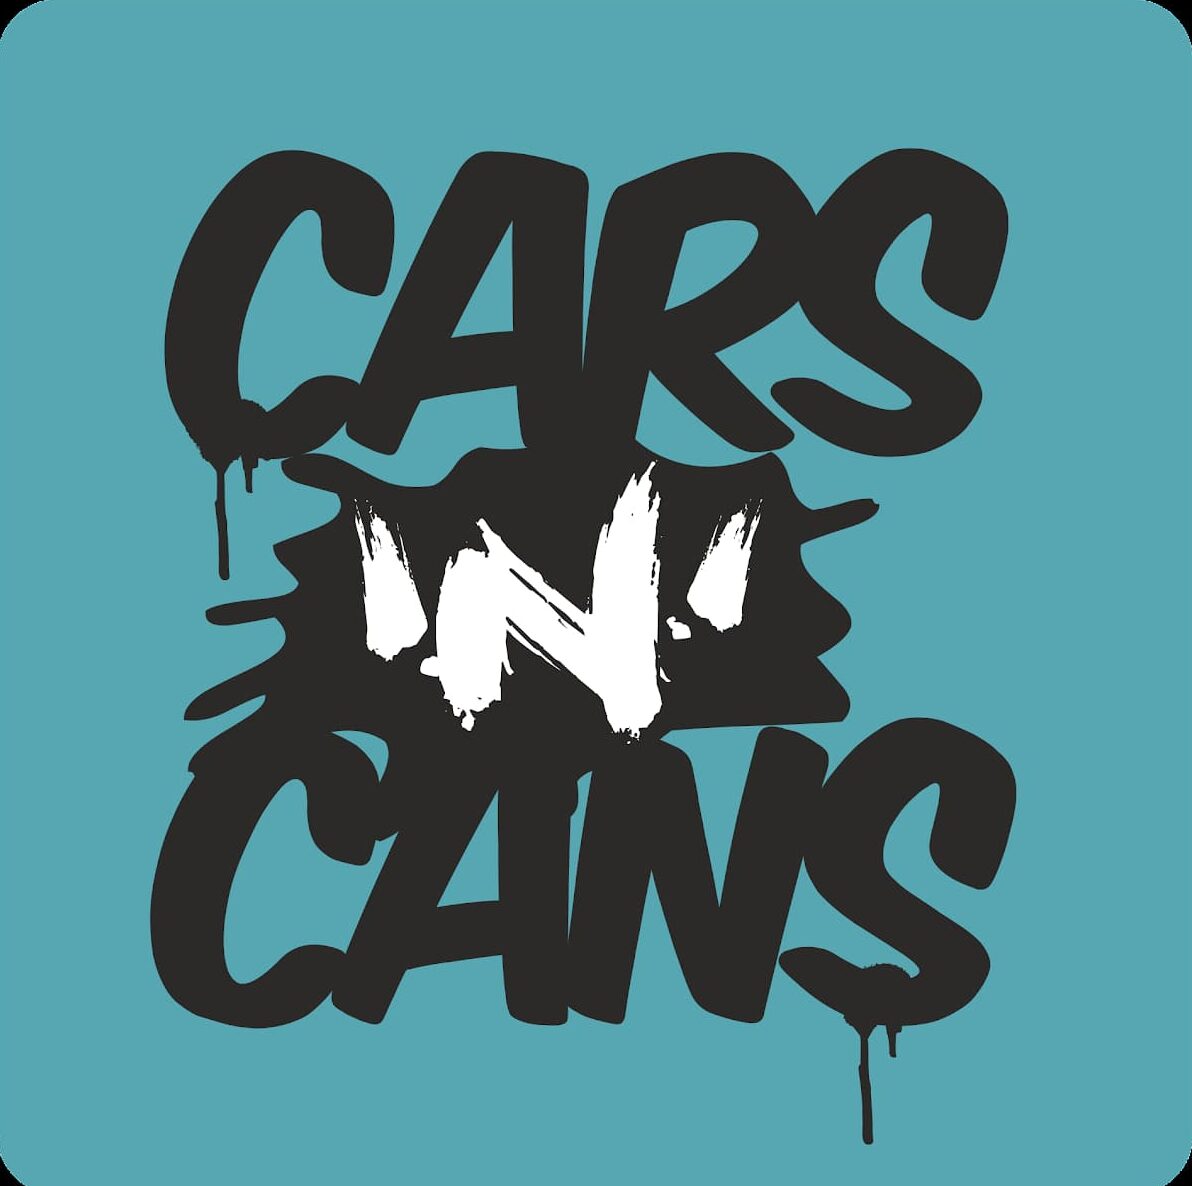 CARS'N'CANS - Hipercentro